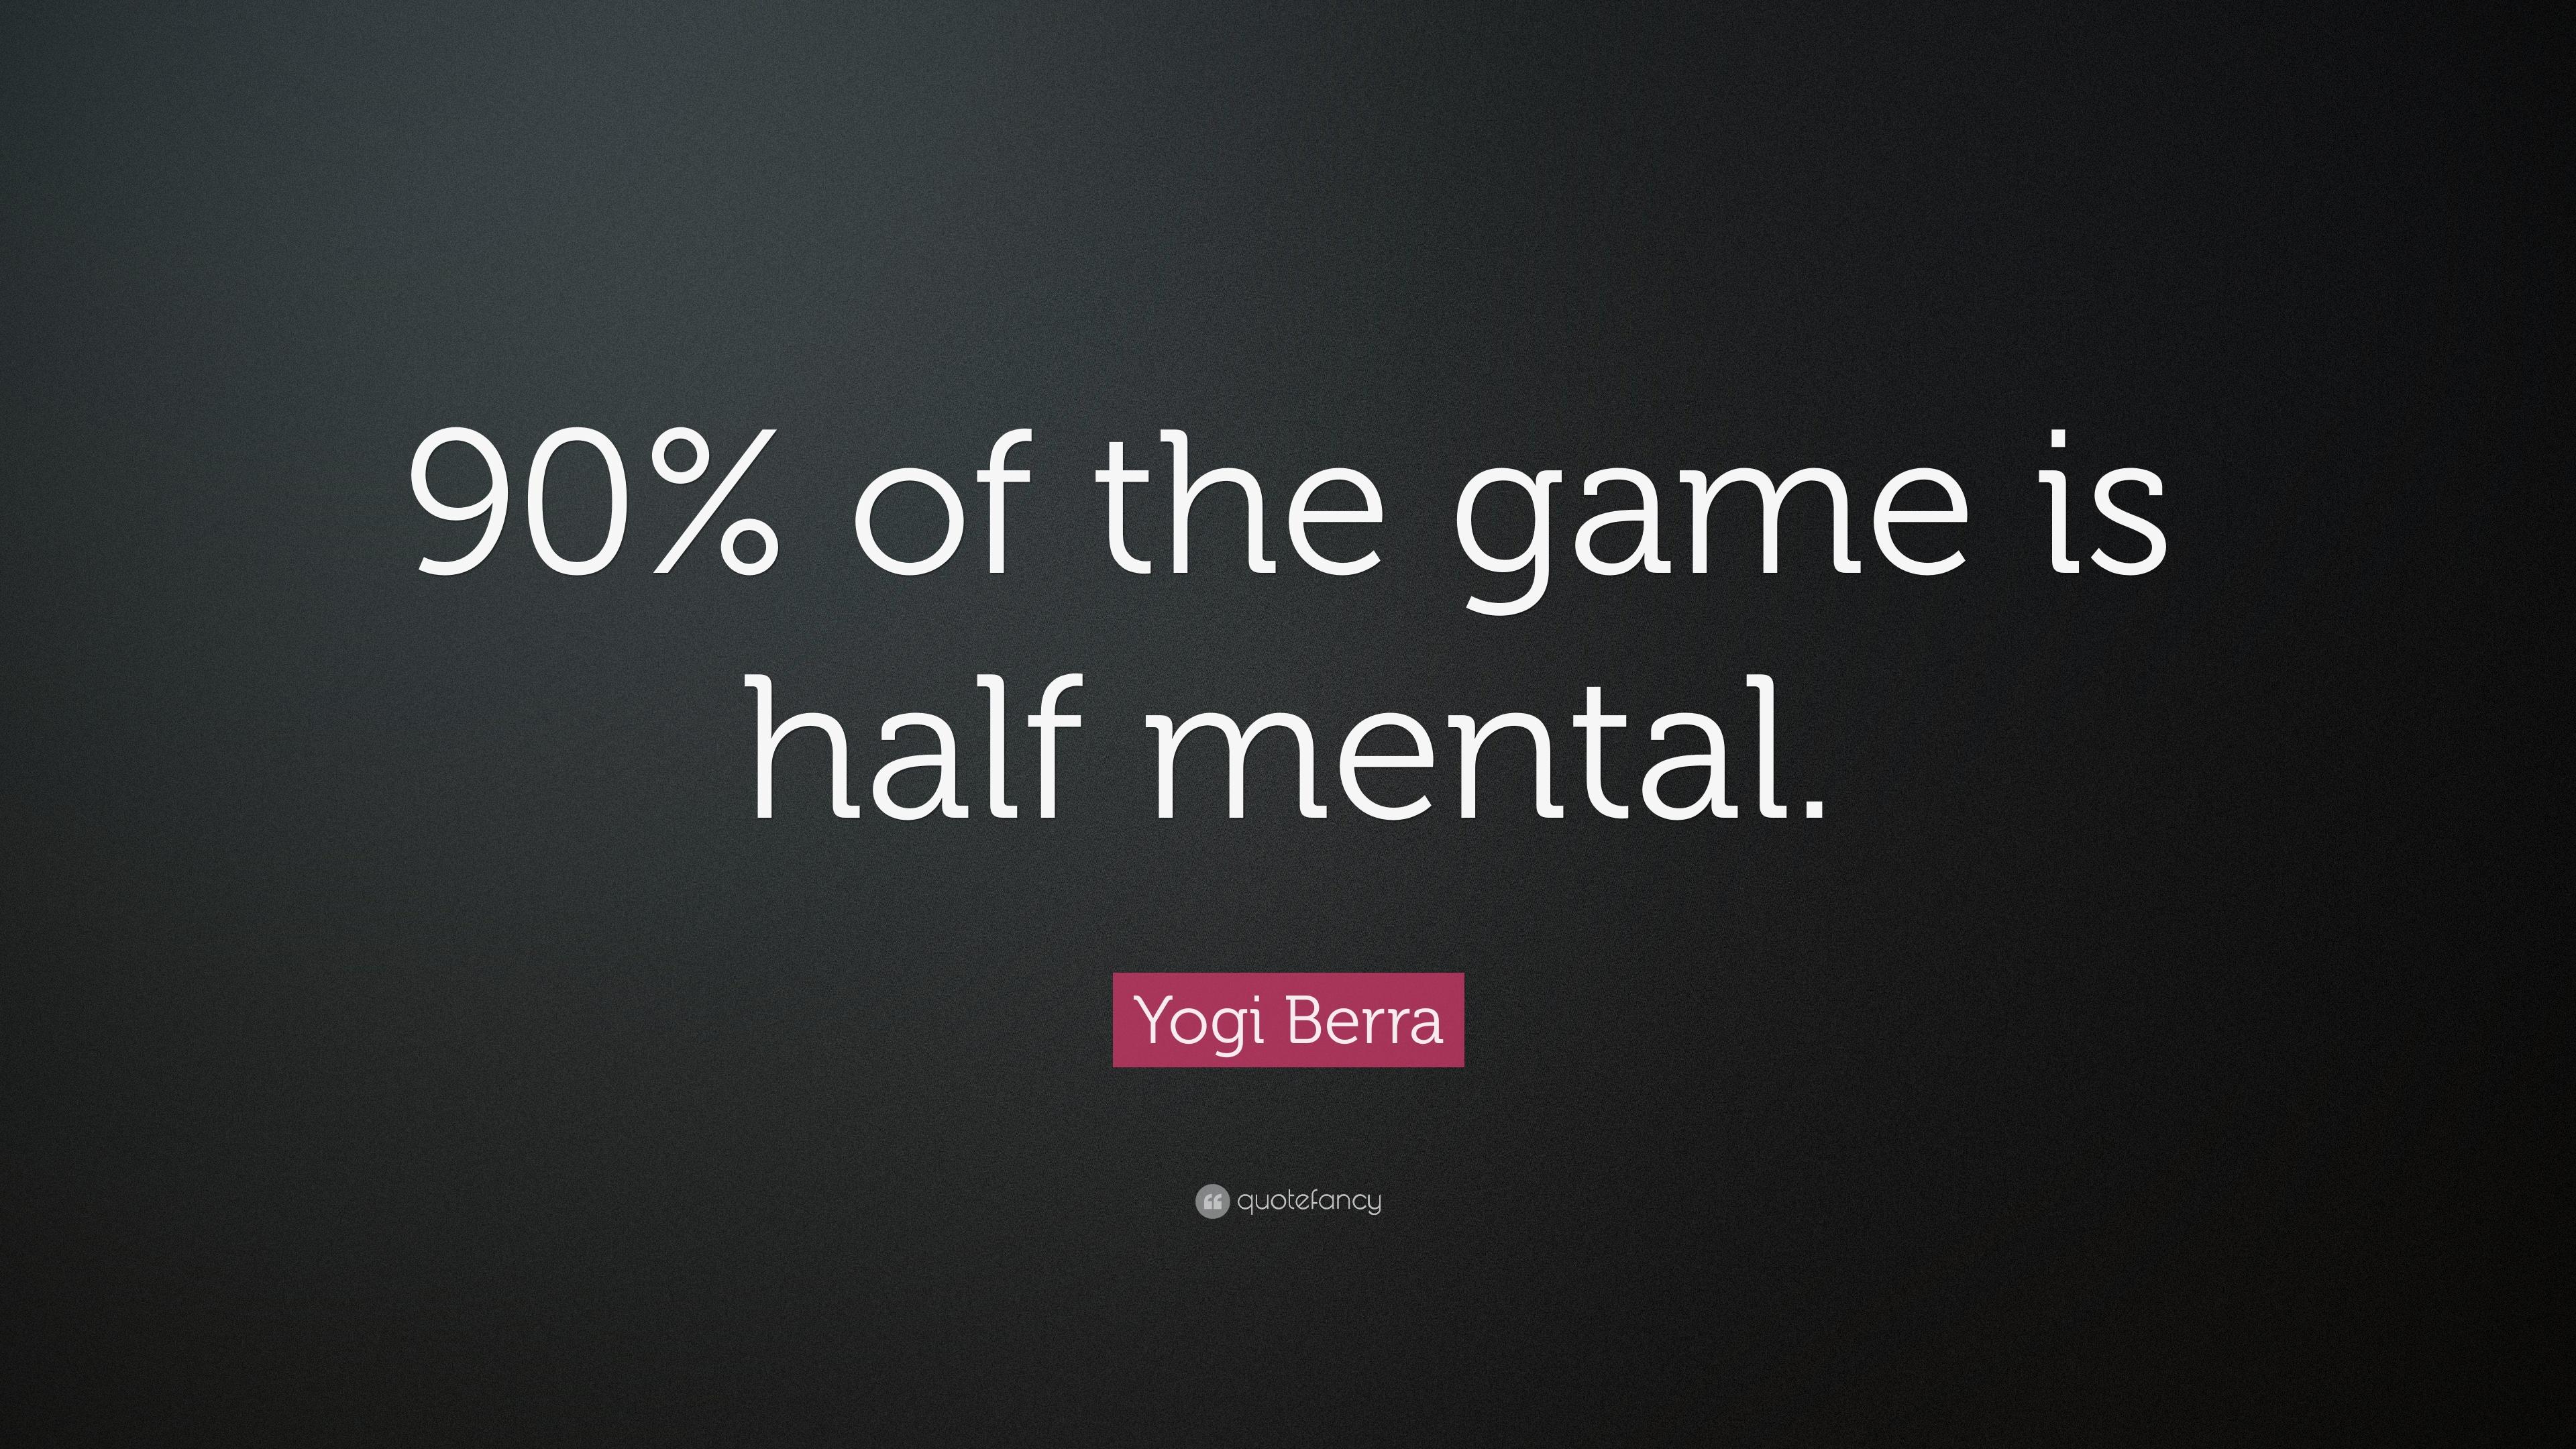 Yogi Berra Quote: “90% of the game is half mental.” 15